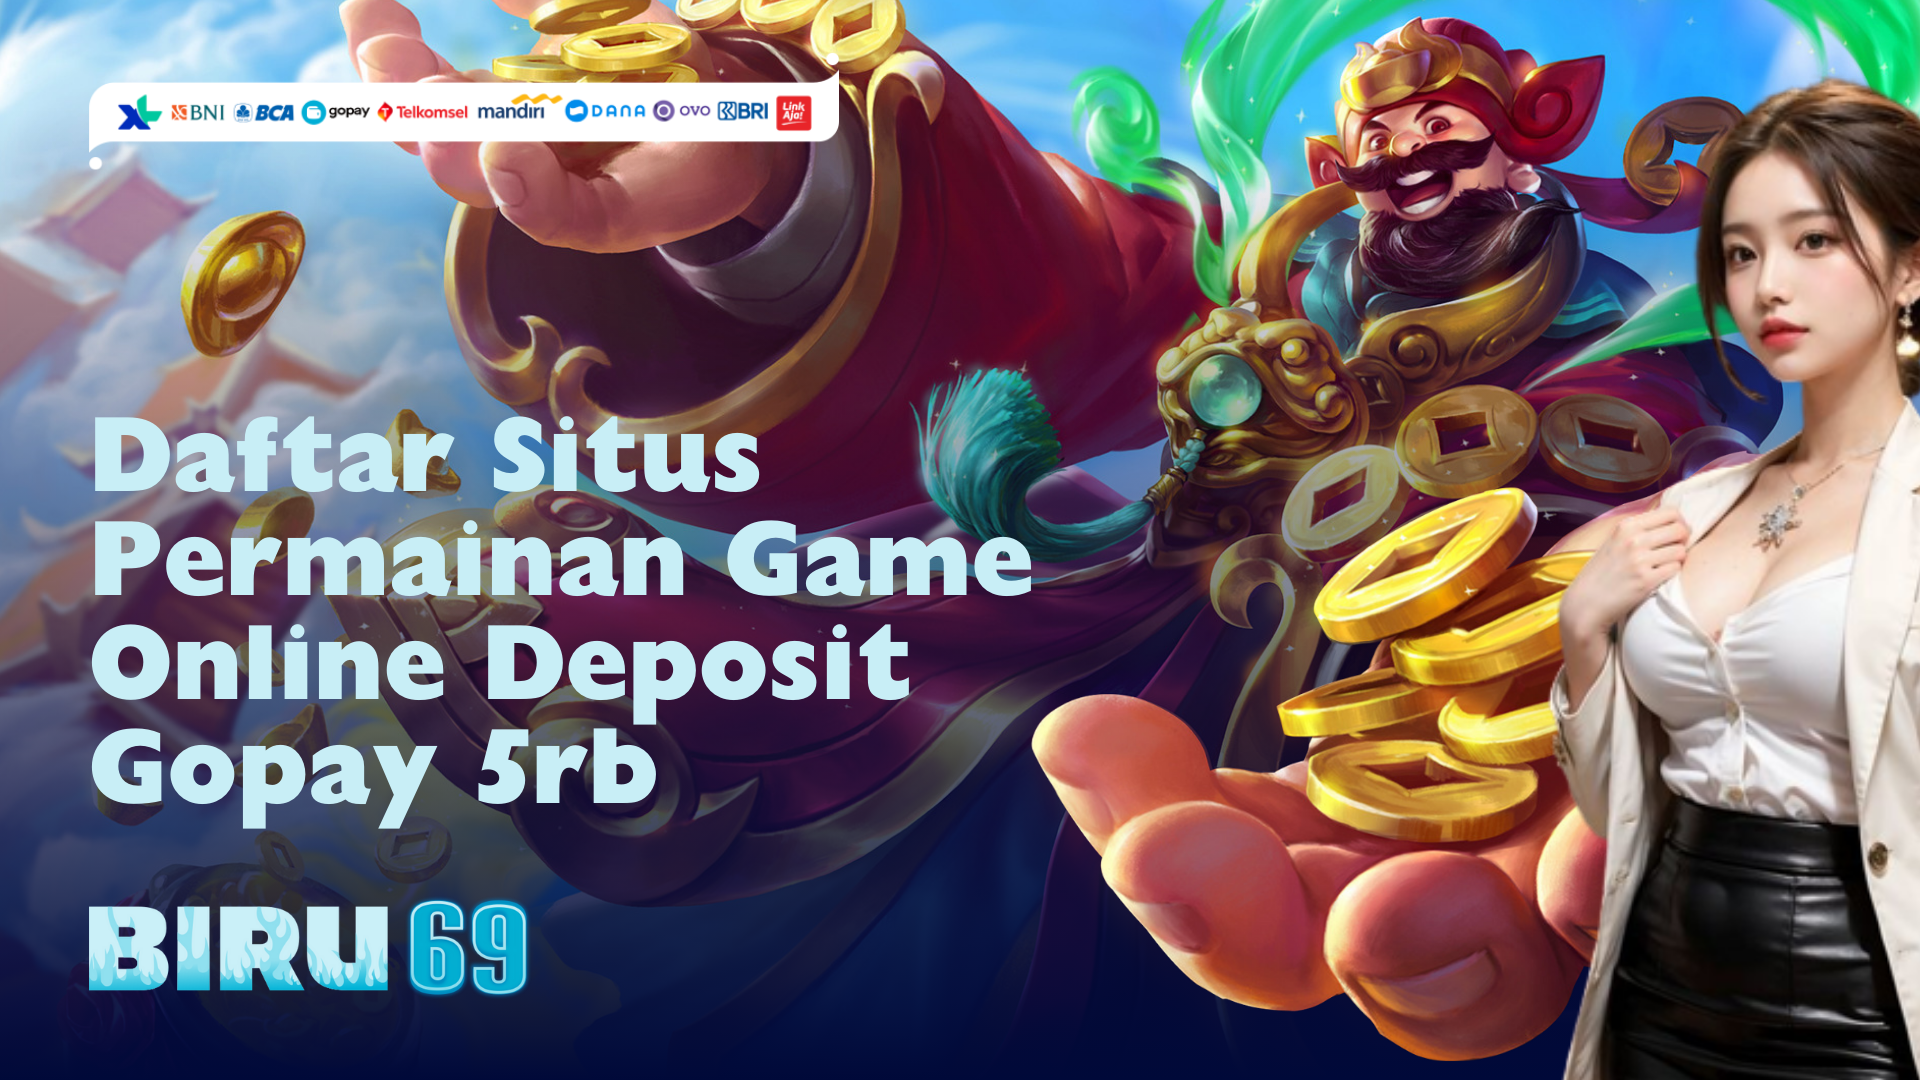 Daftar Situs Permainan Game Online Deposit Gopay 5rb